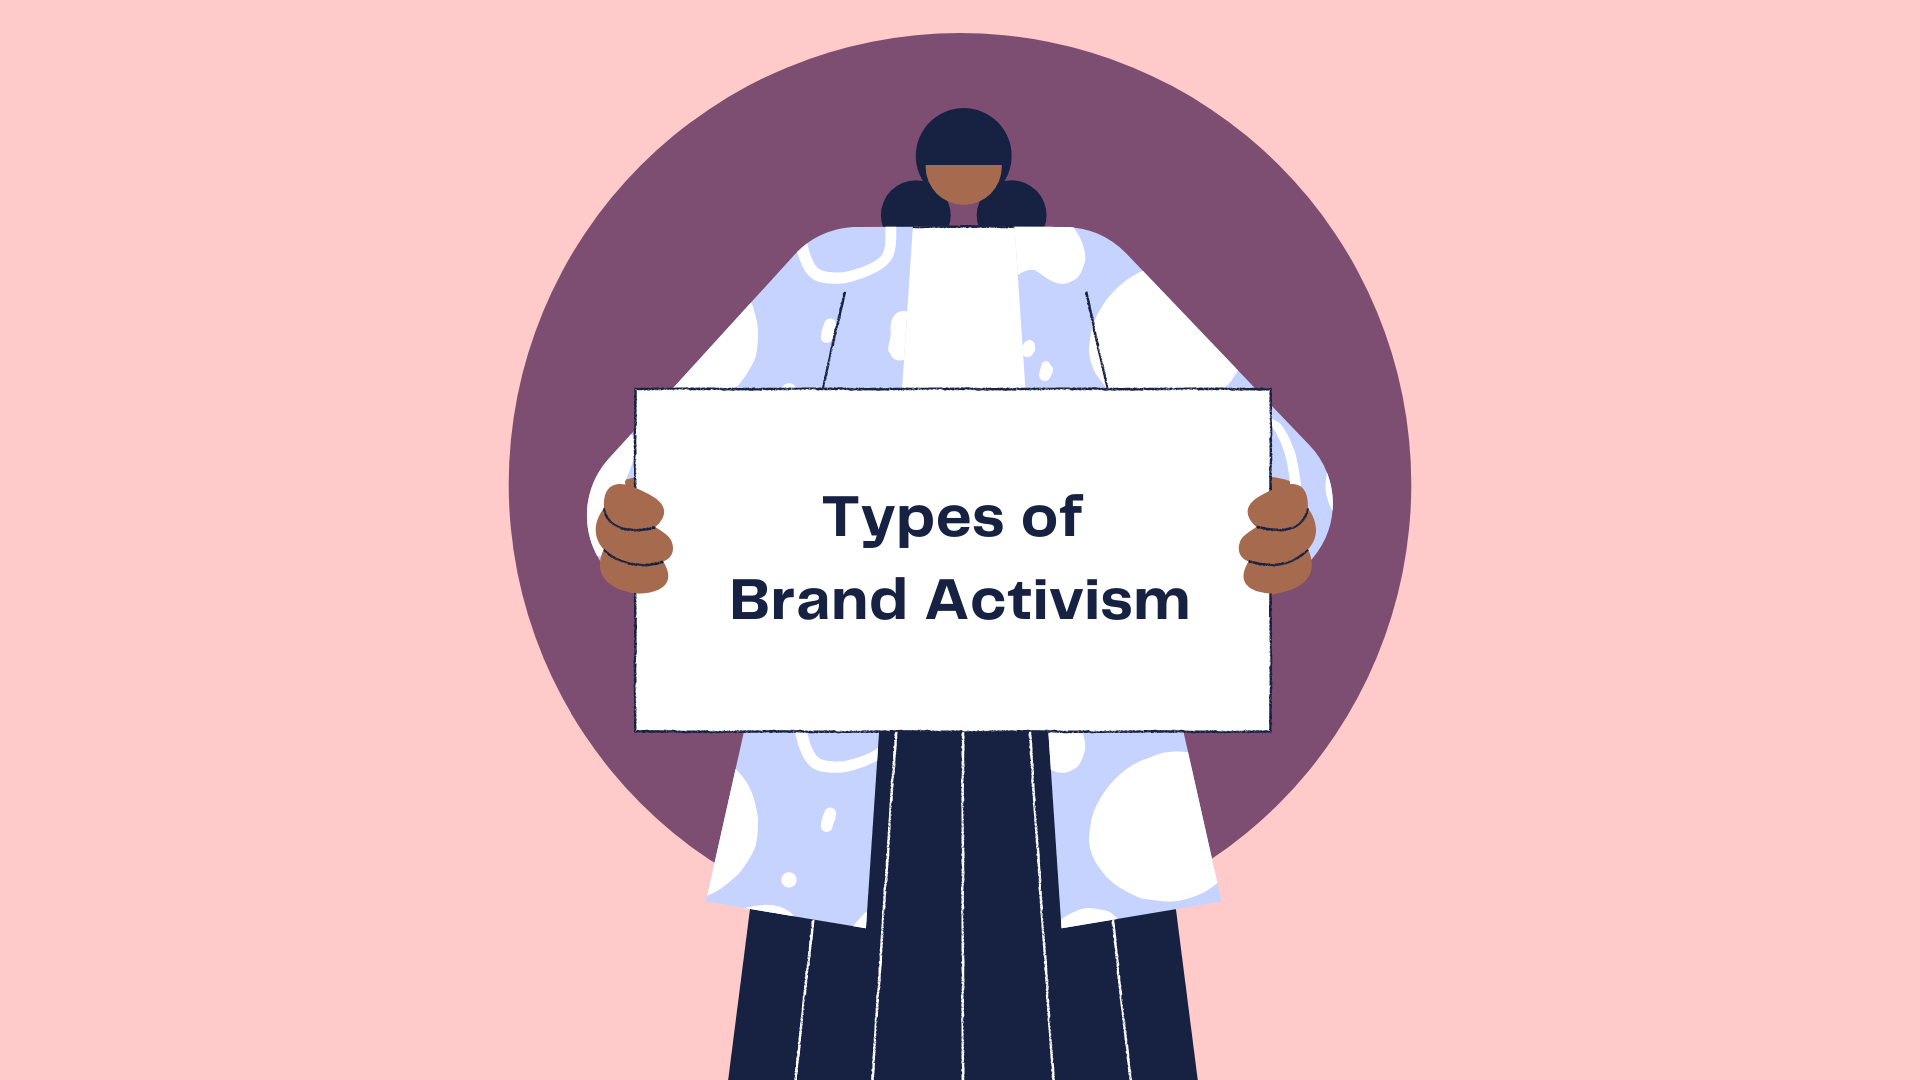 Types of brand activism